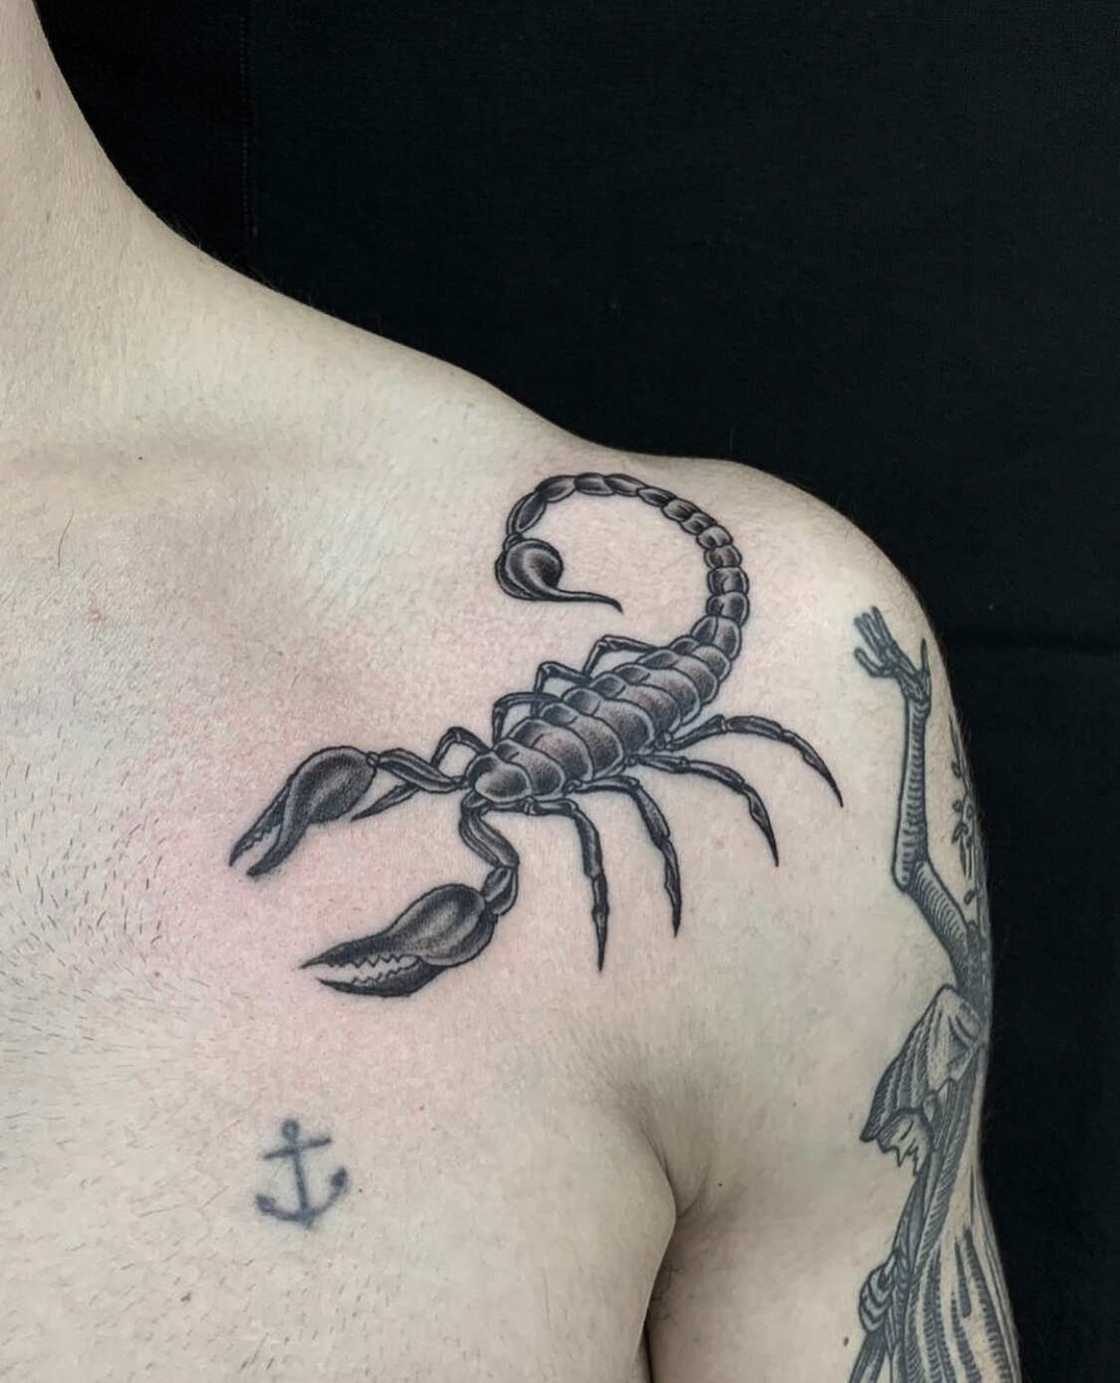 Scorpion tattoo ideas